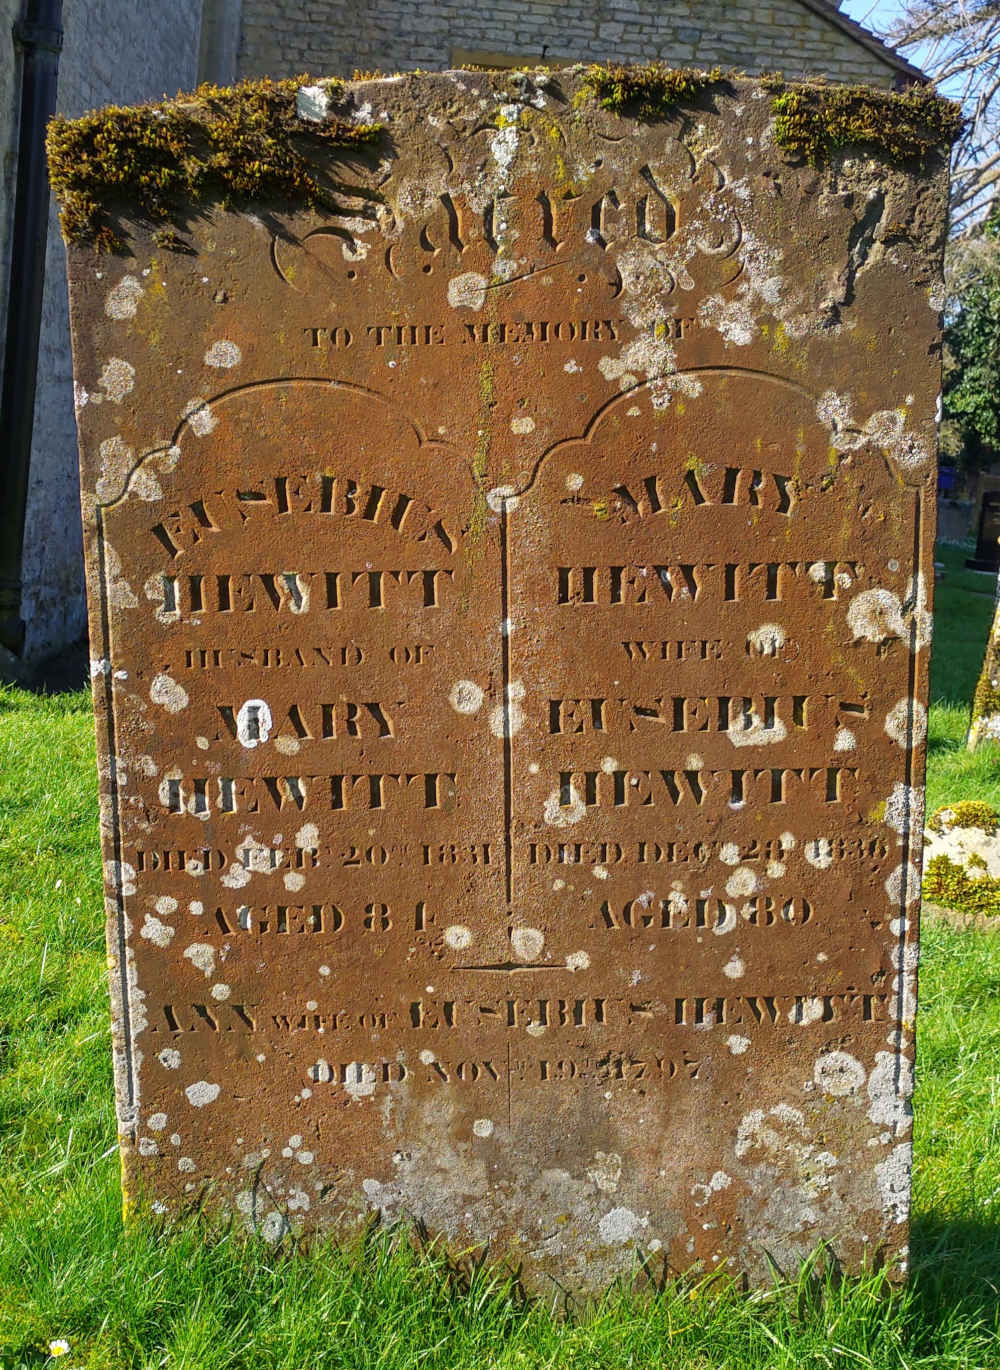 Gravestone St Andrews Churchyard Great Linford Eusebius and Mary Hewitt